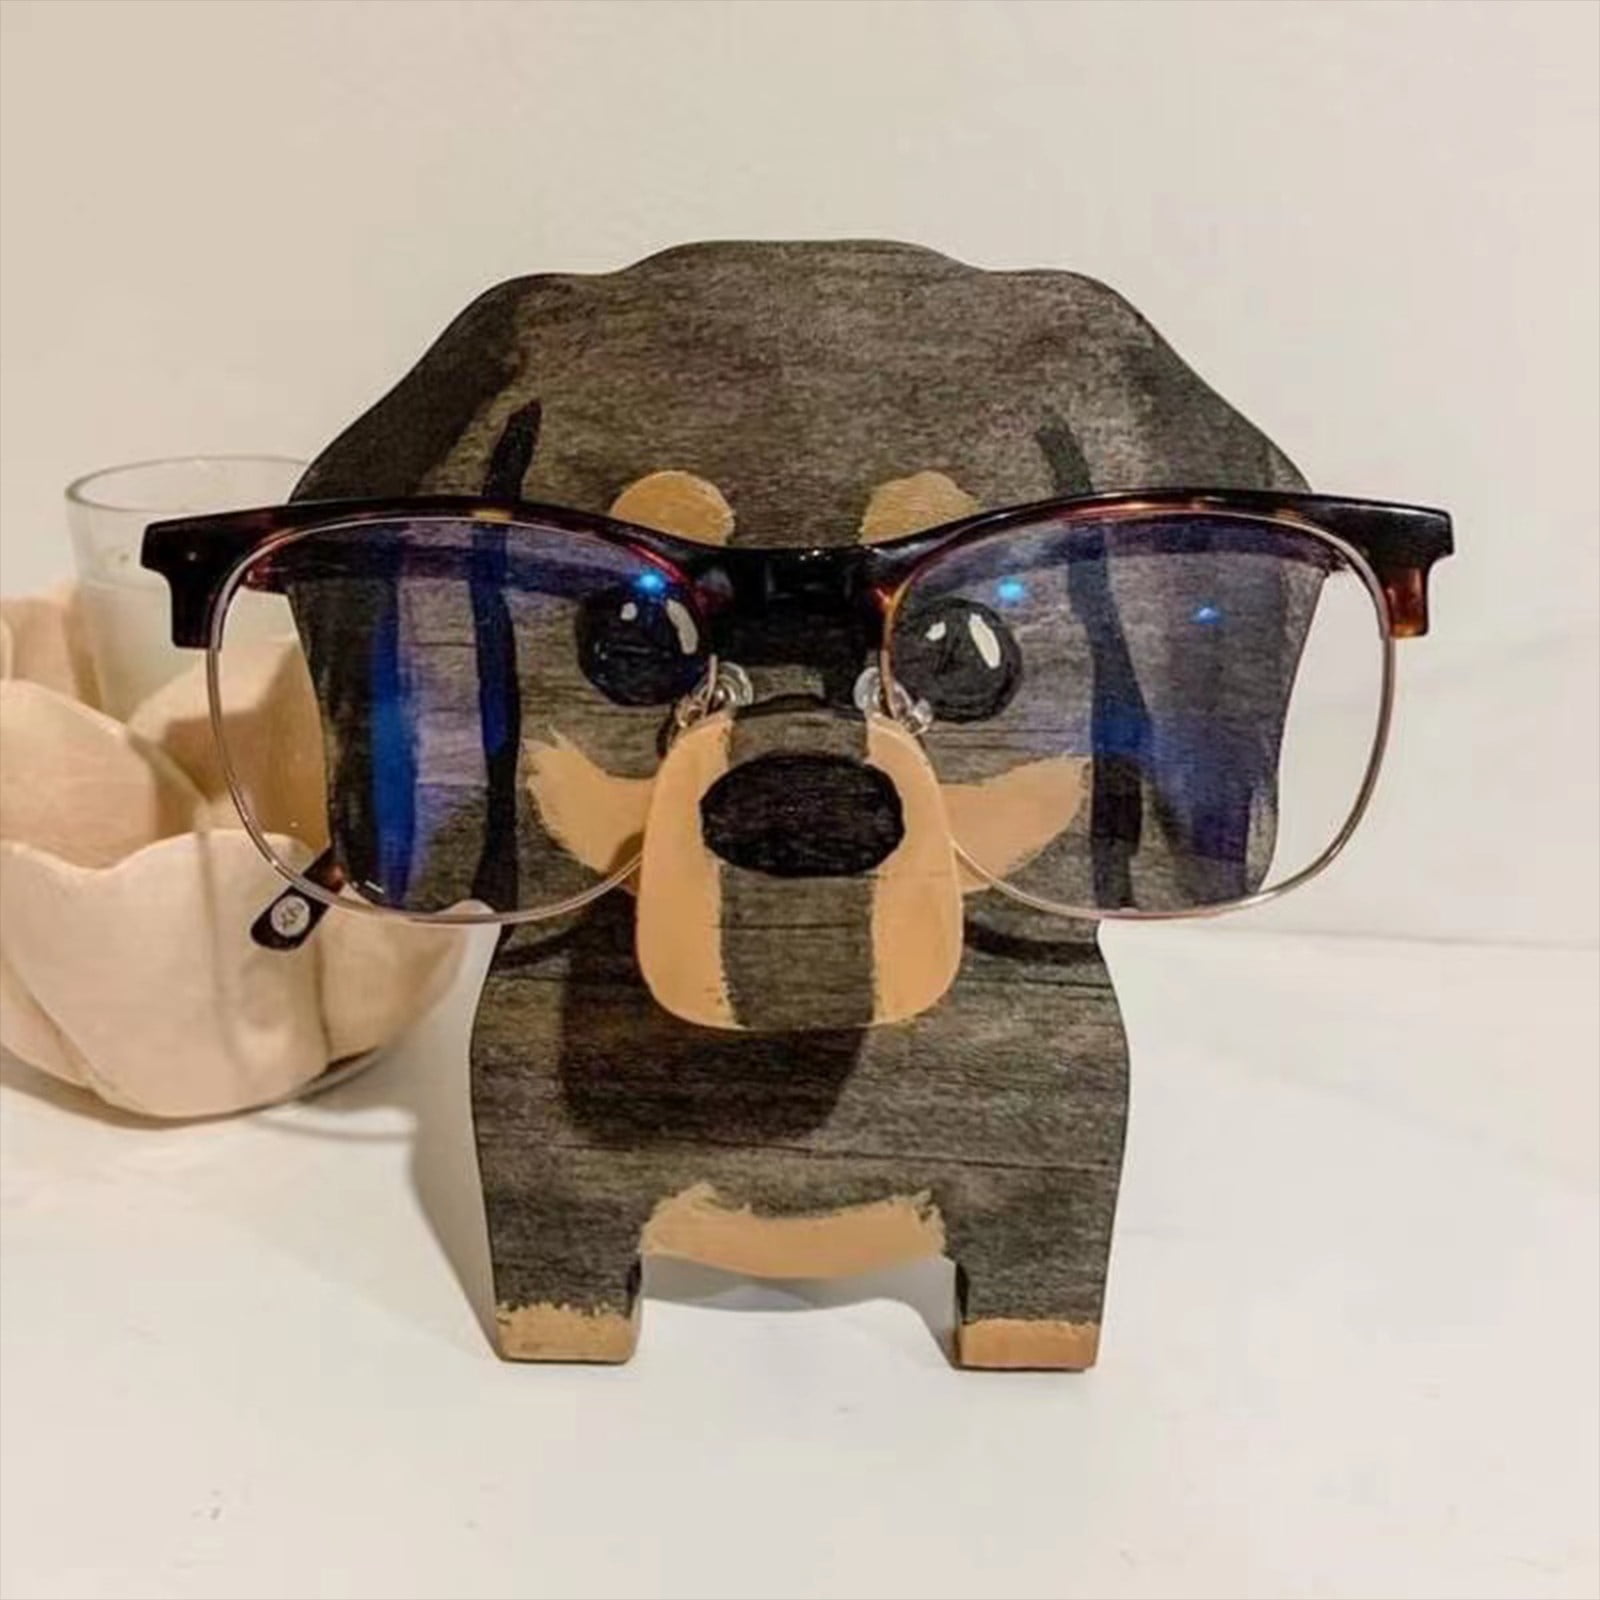 Hand-Painted Dog Eyeglass Holder Display Stand